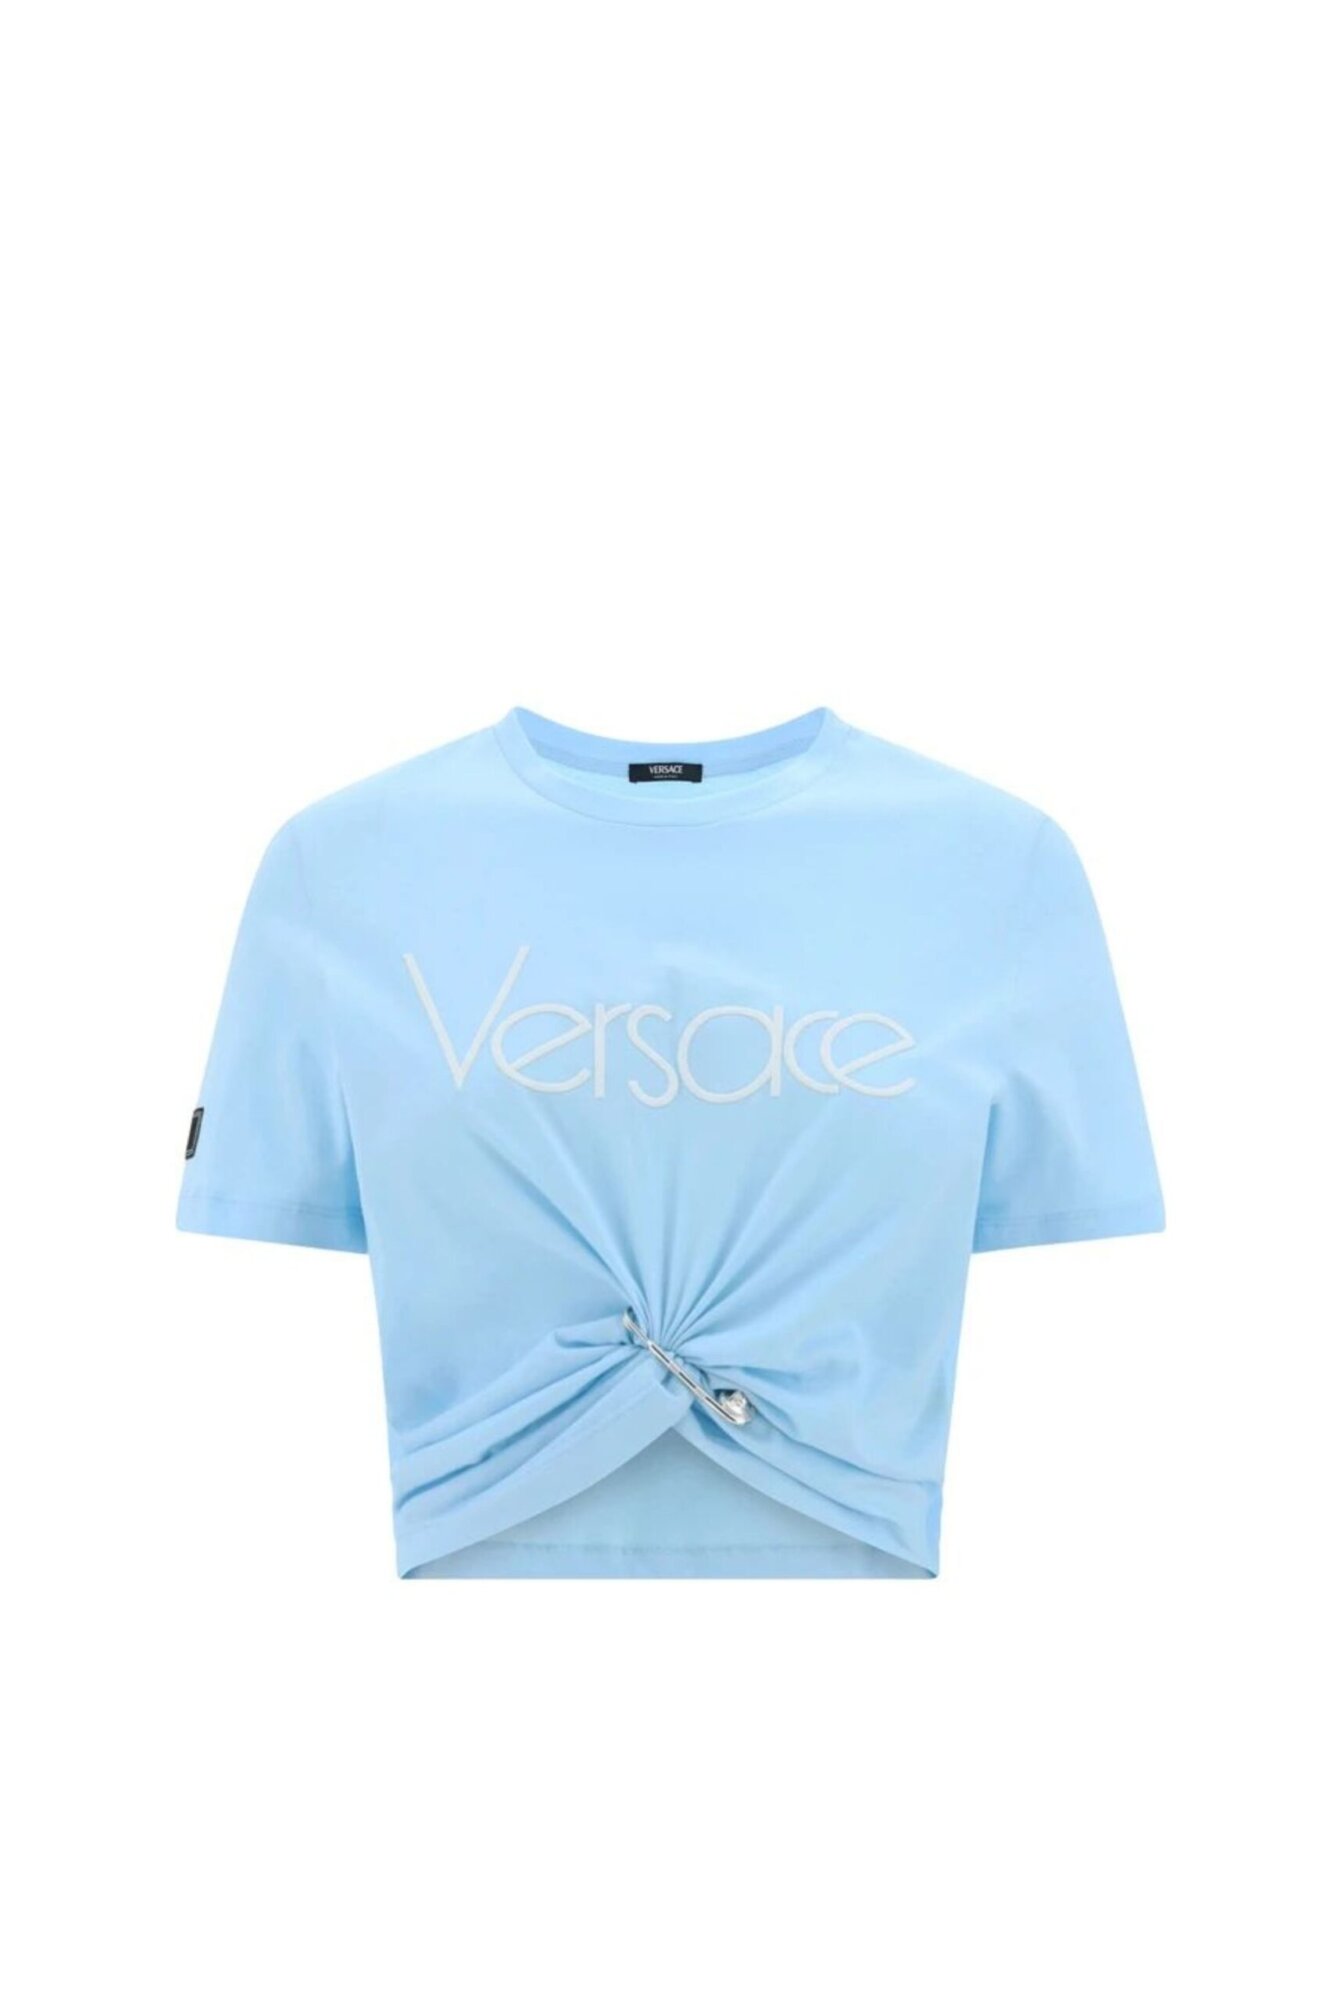 Versace T shirt corta 1978 con logo vista frontale